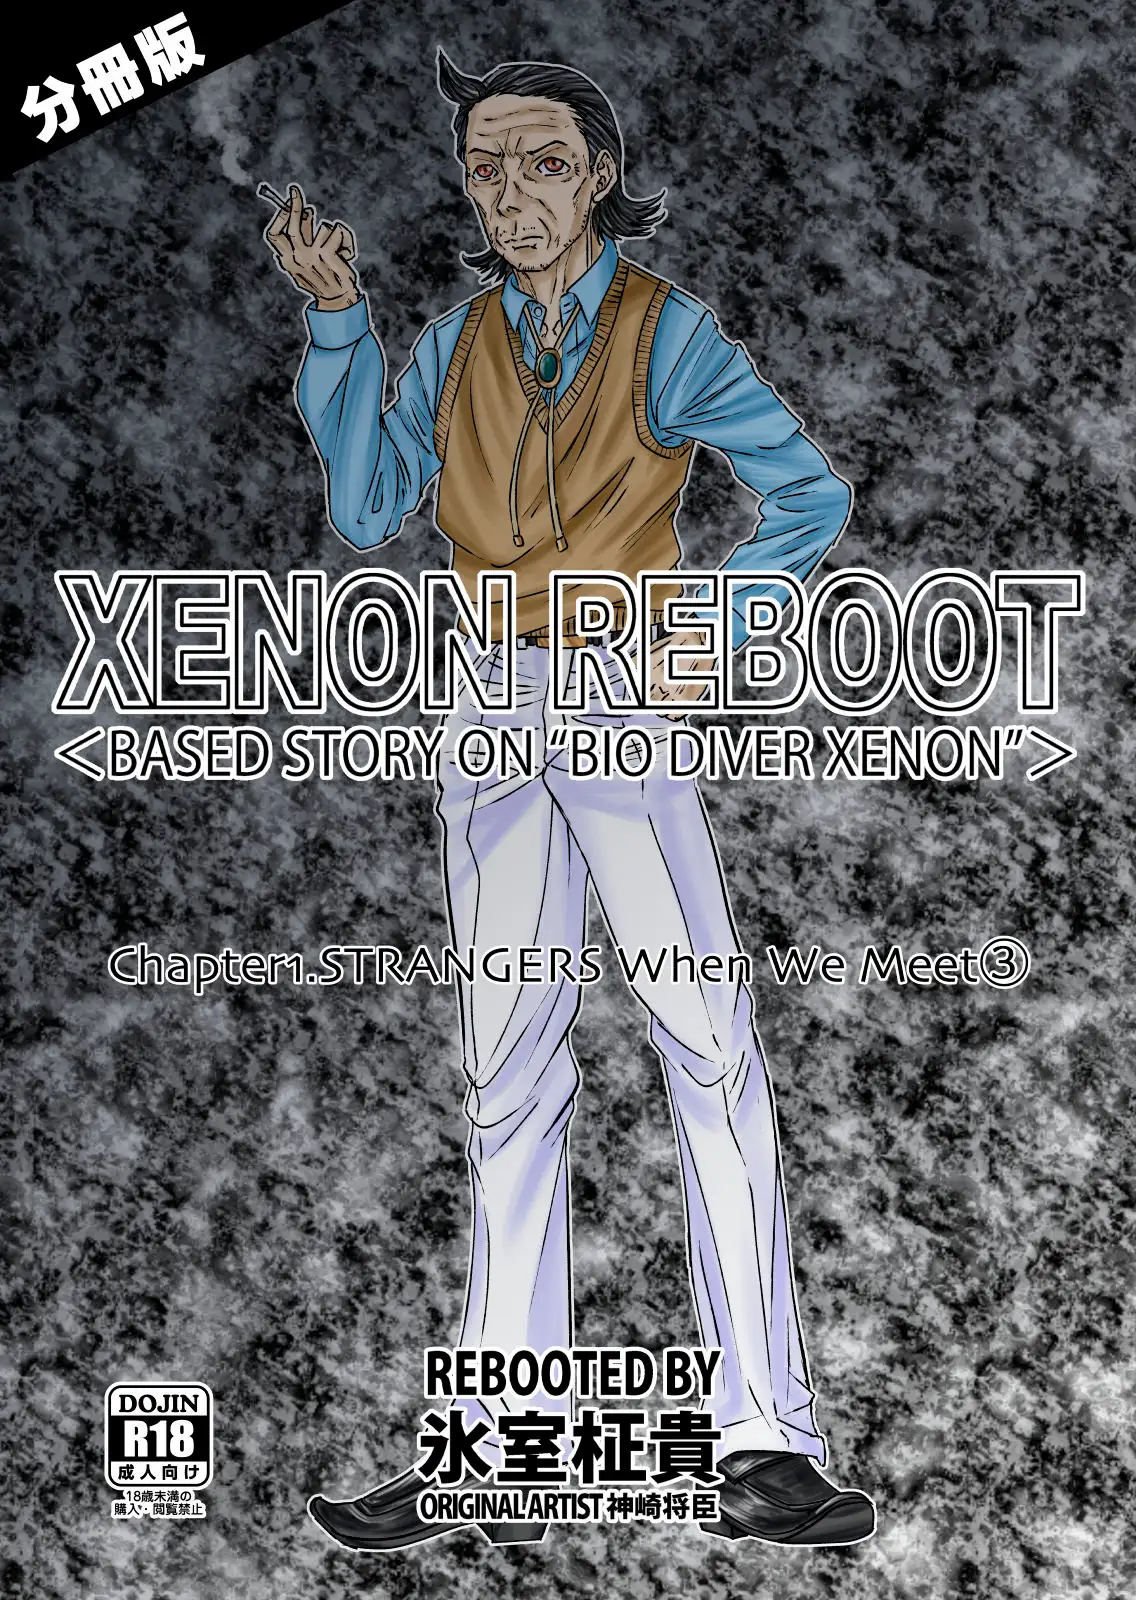 [STRAYLIGHT]XENON REBOOT Chapter1.STRANGERS When We Meet(3)